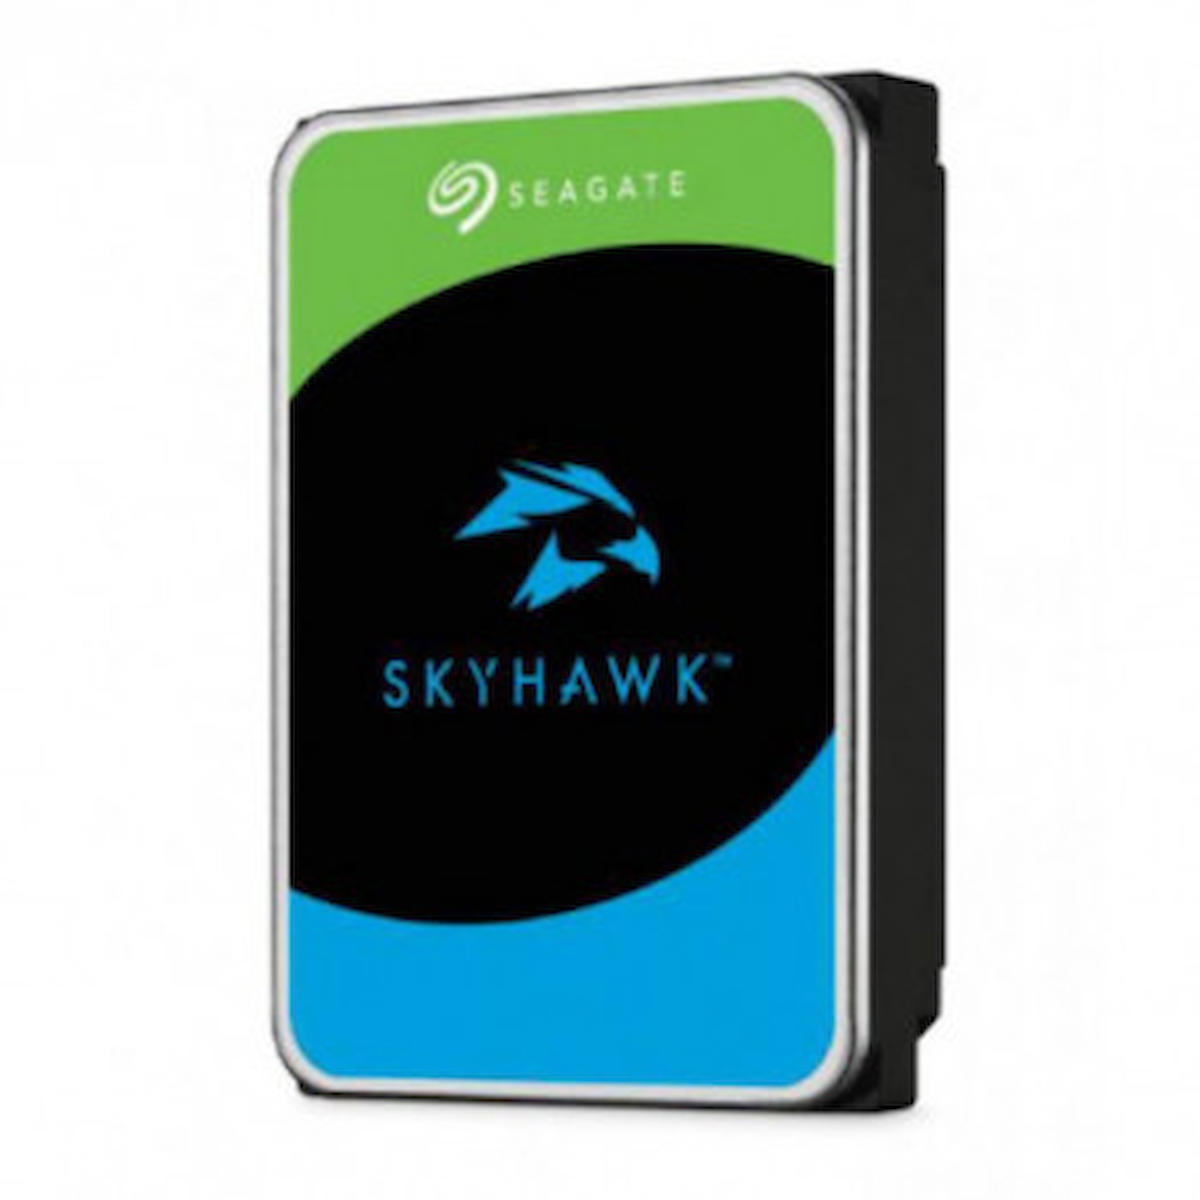 Seagate Skyhawk ST1000VX013 1 TB 3.5 inç 5400 RPM 256 MB SATA 3.0 Güvenlik Kamerası Harddisk